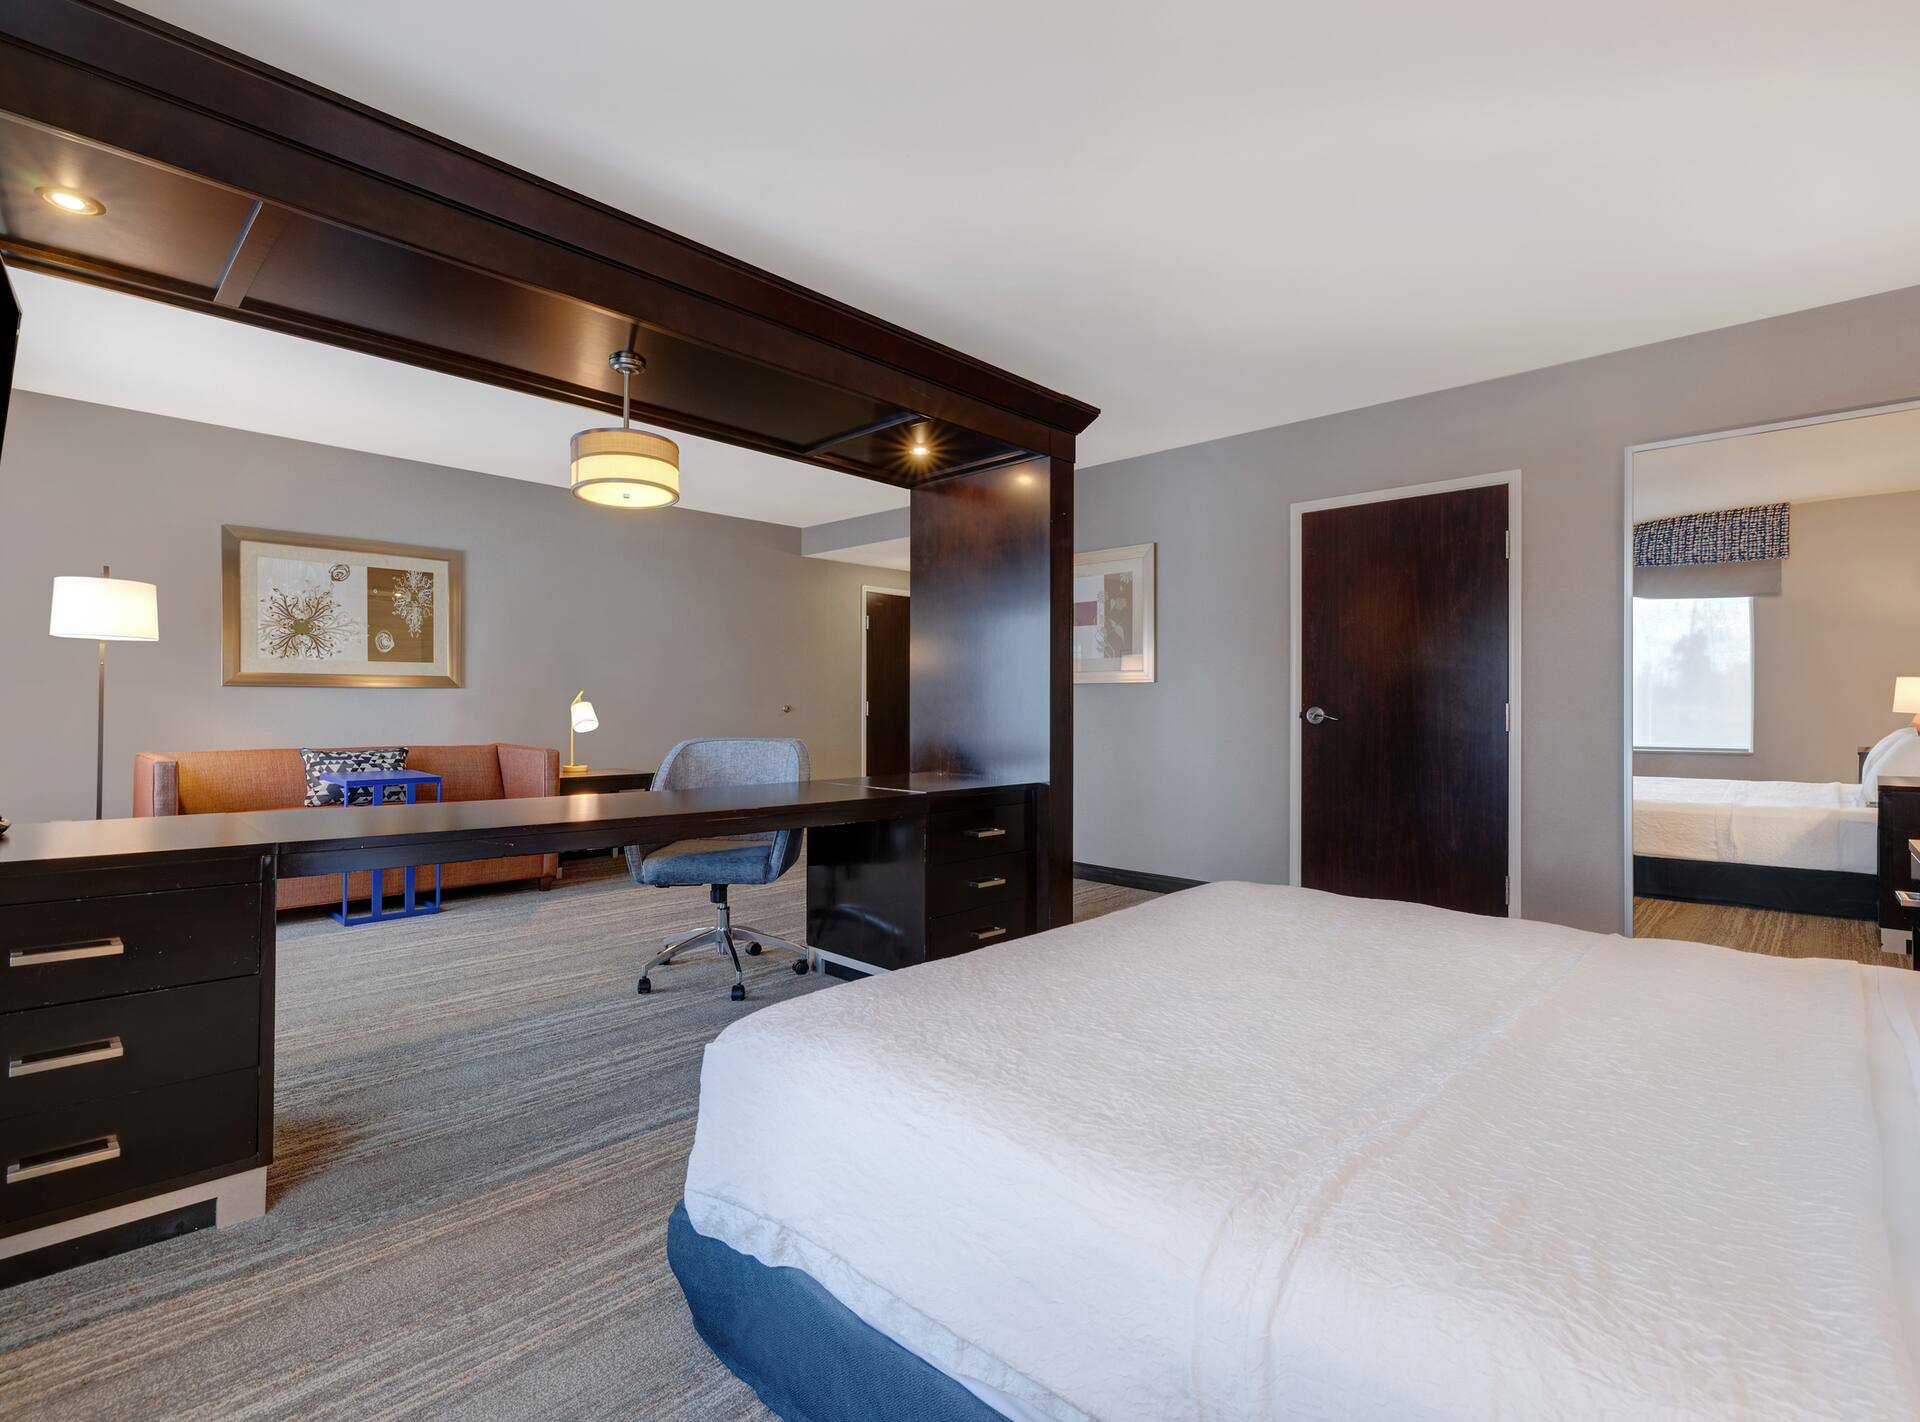 Photo of Hampton Inn & Suites Seattle/Federal Way, Federal Way, WA